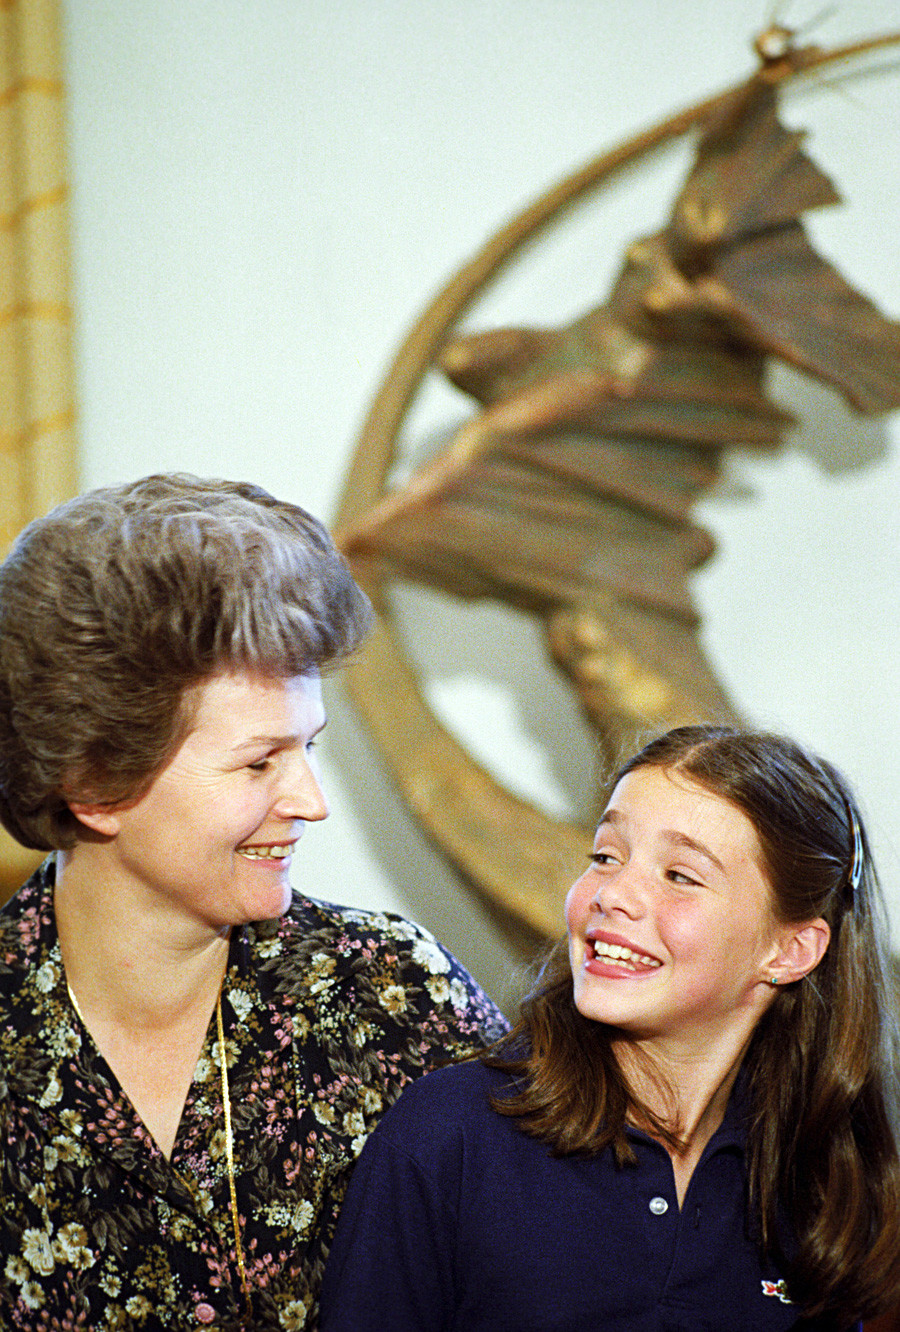 Avec Valentina Terechkova, première femme cosmonaute 